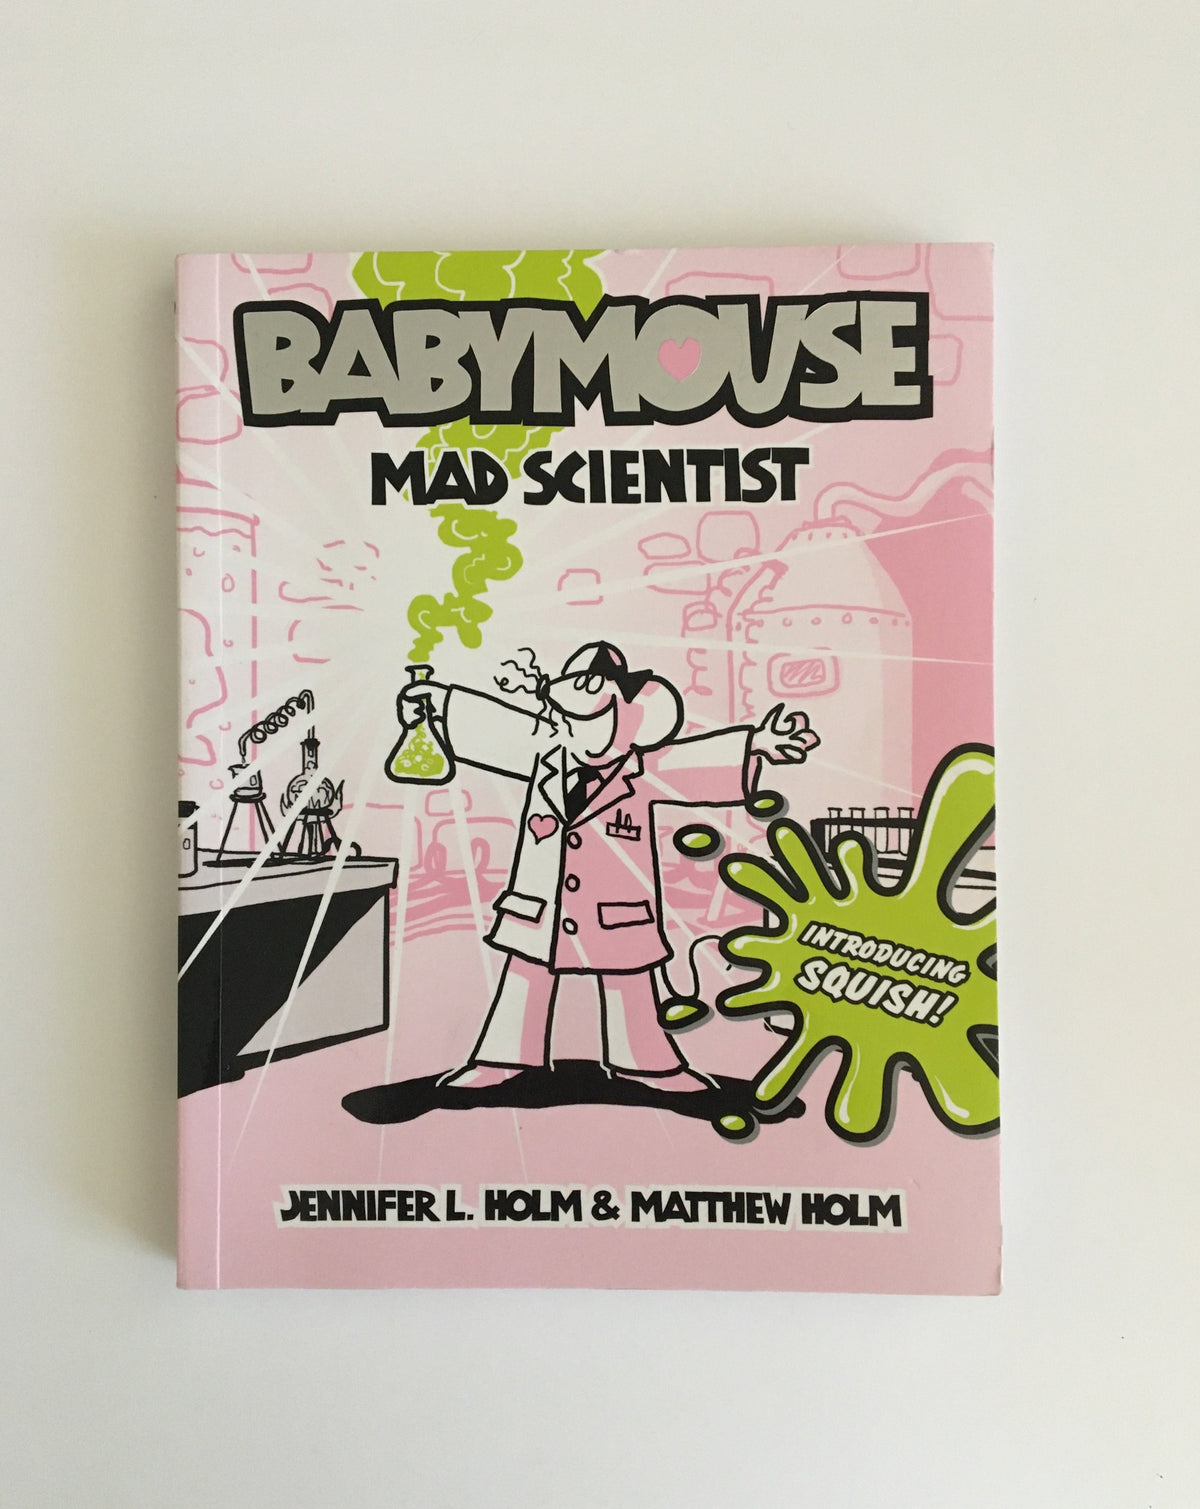 Babymouse: Mad Scientist by Jennifer L. Holm &amp; Matthew Holm